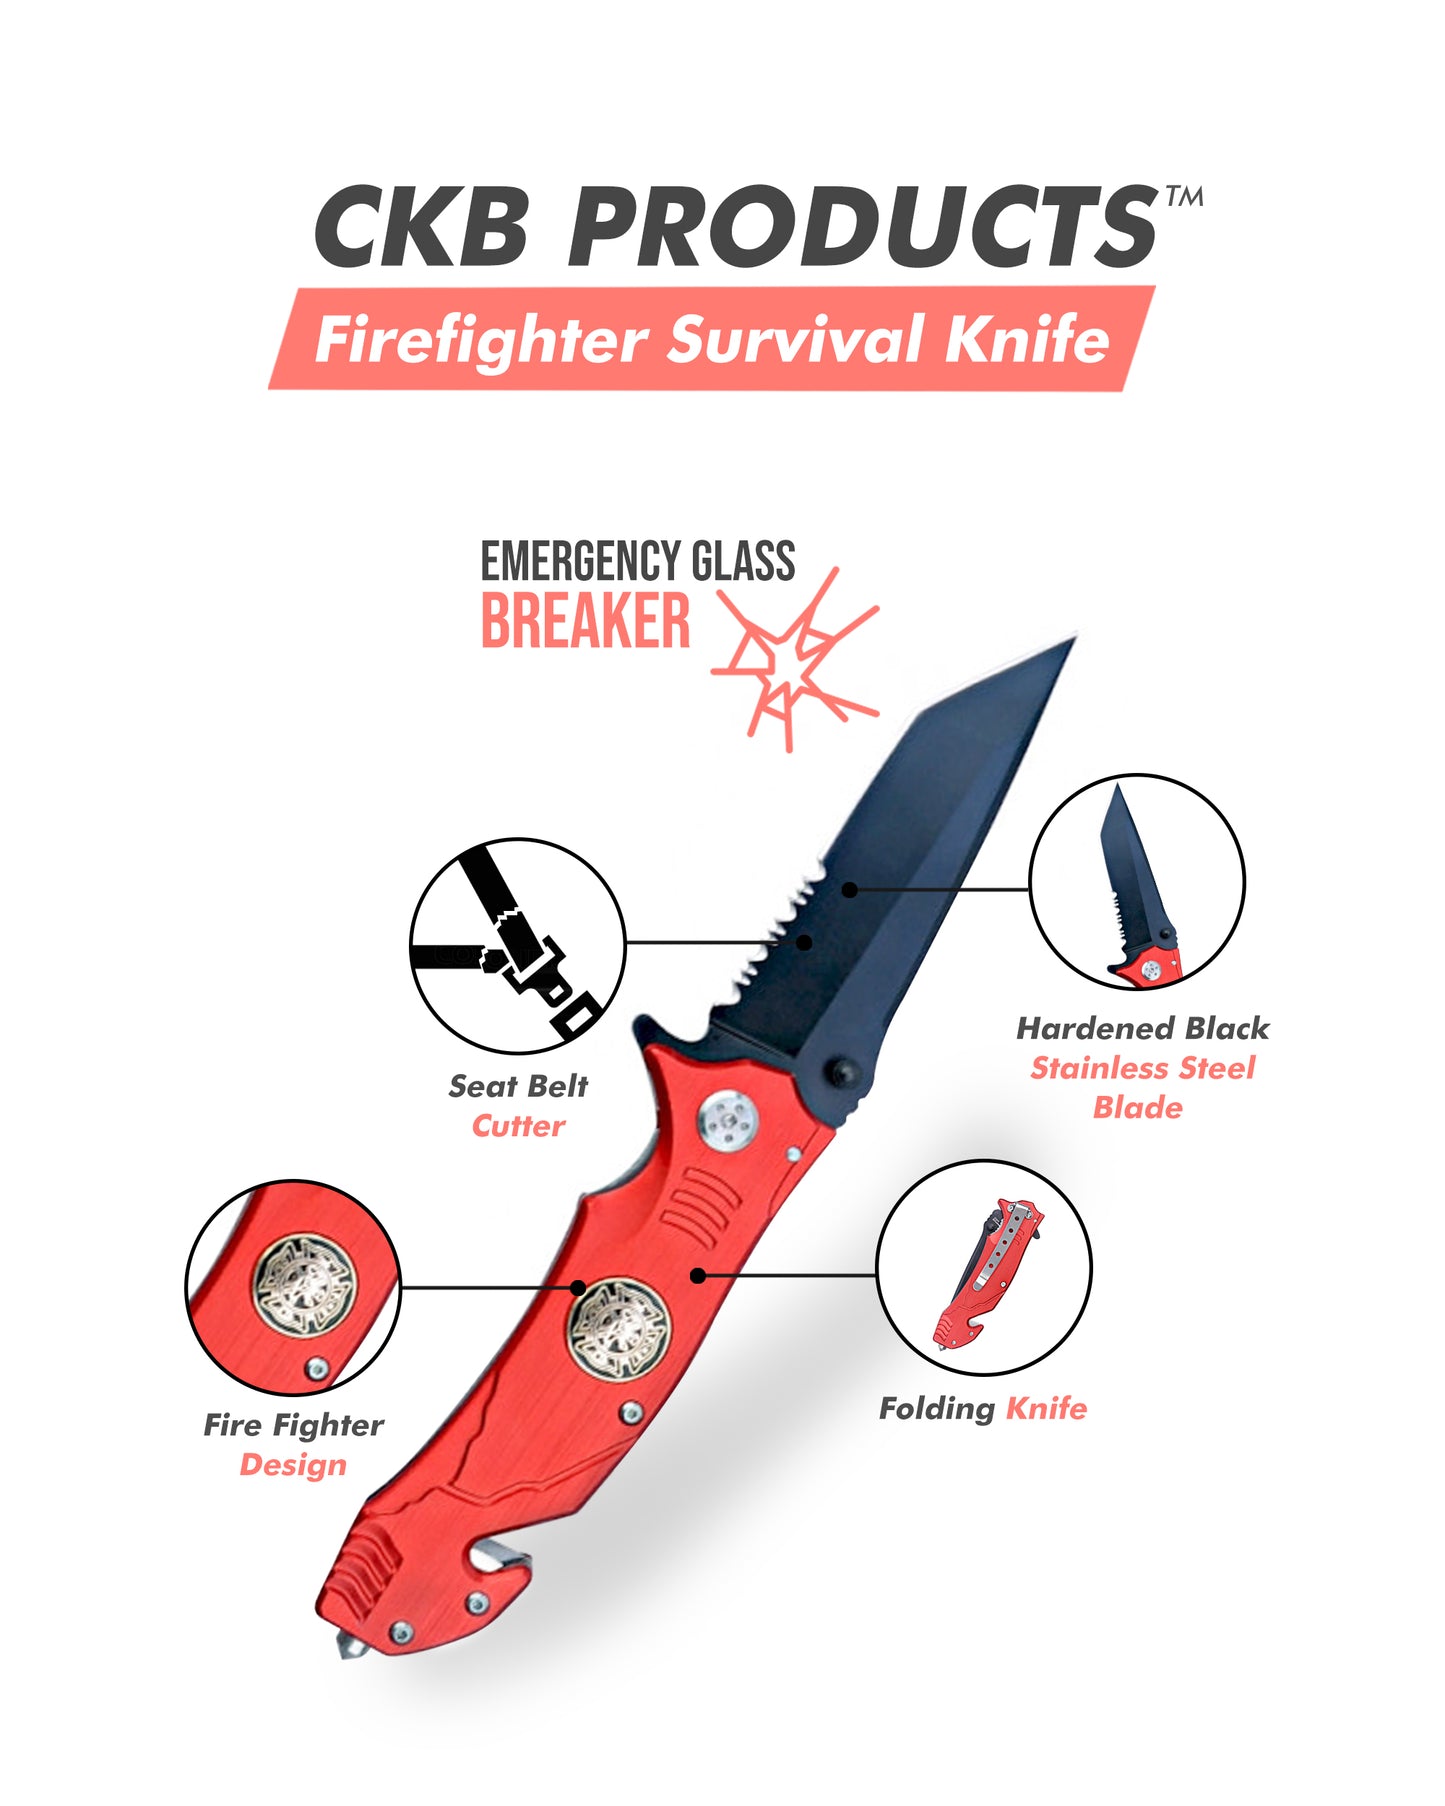 Folding Fire Fighter Knife - Firefighter Design - 3" Black Steel Blade